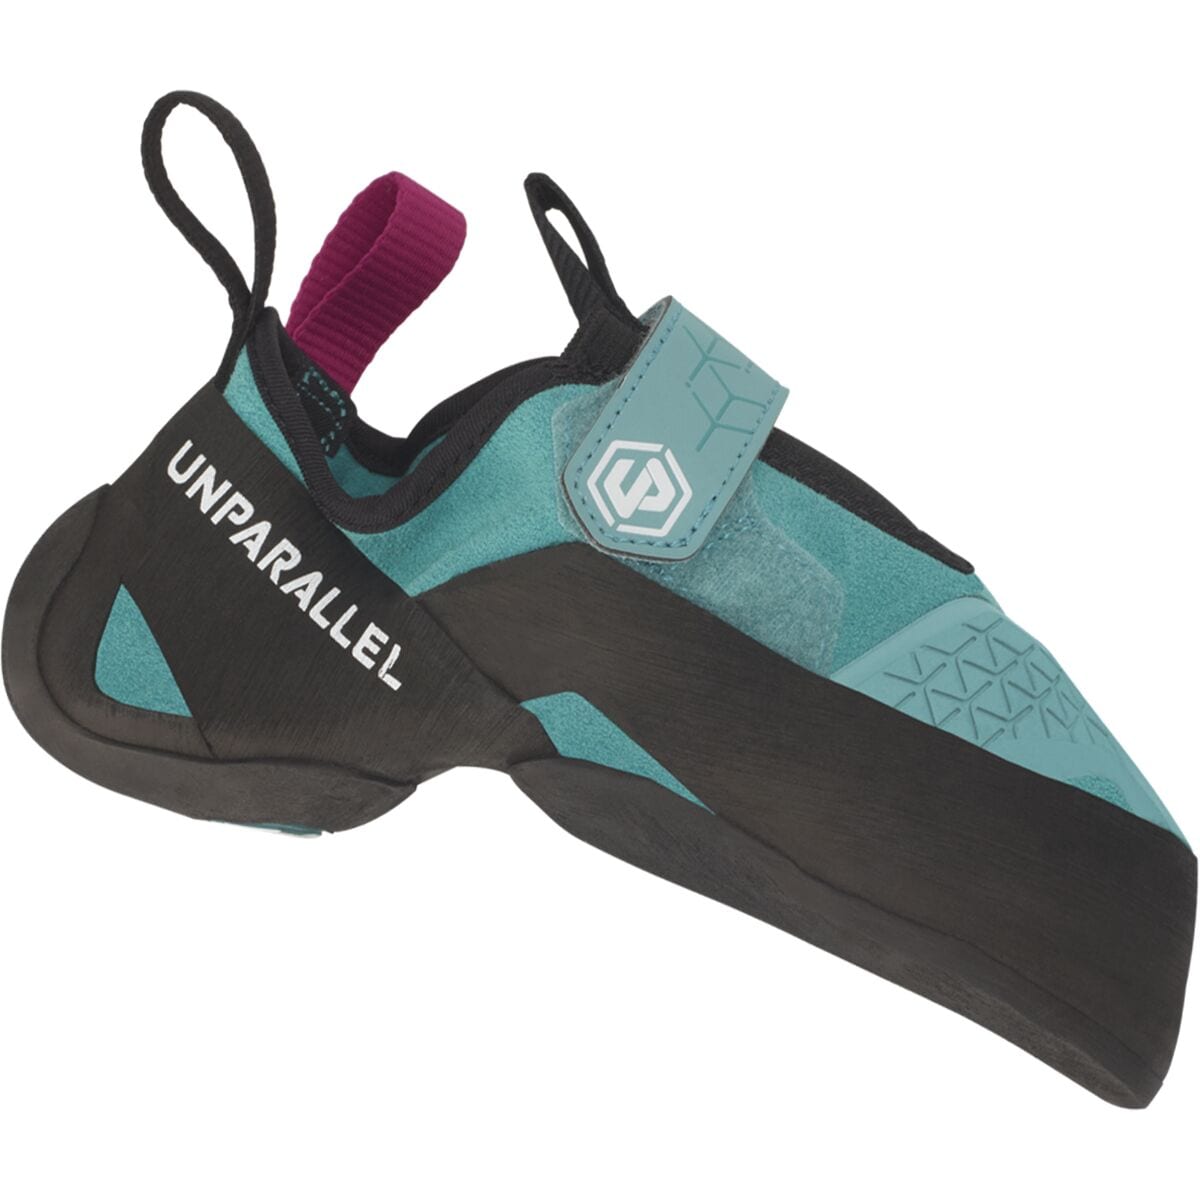 UnParallel TN Pro LV Shoe